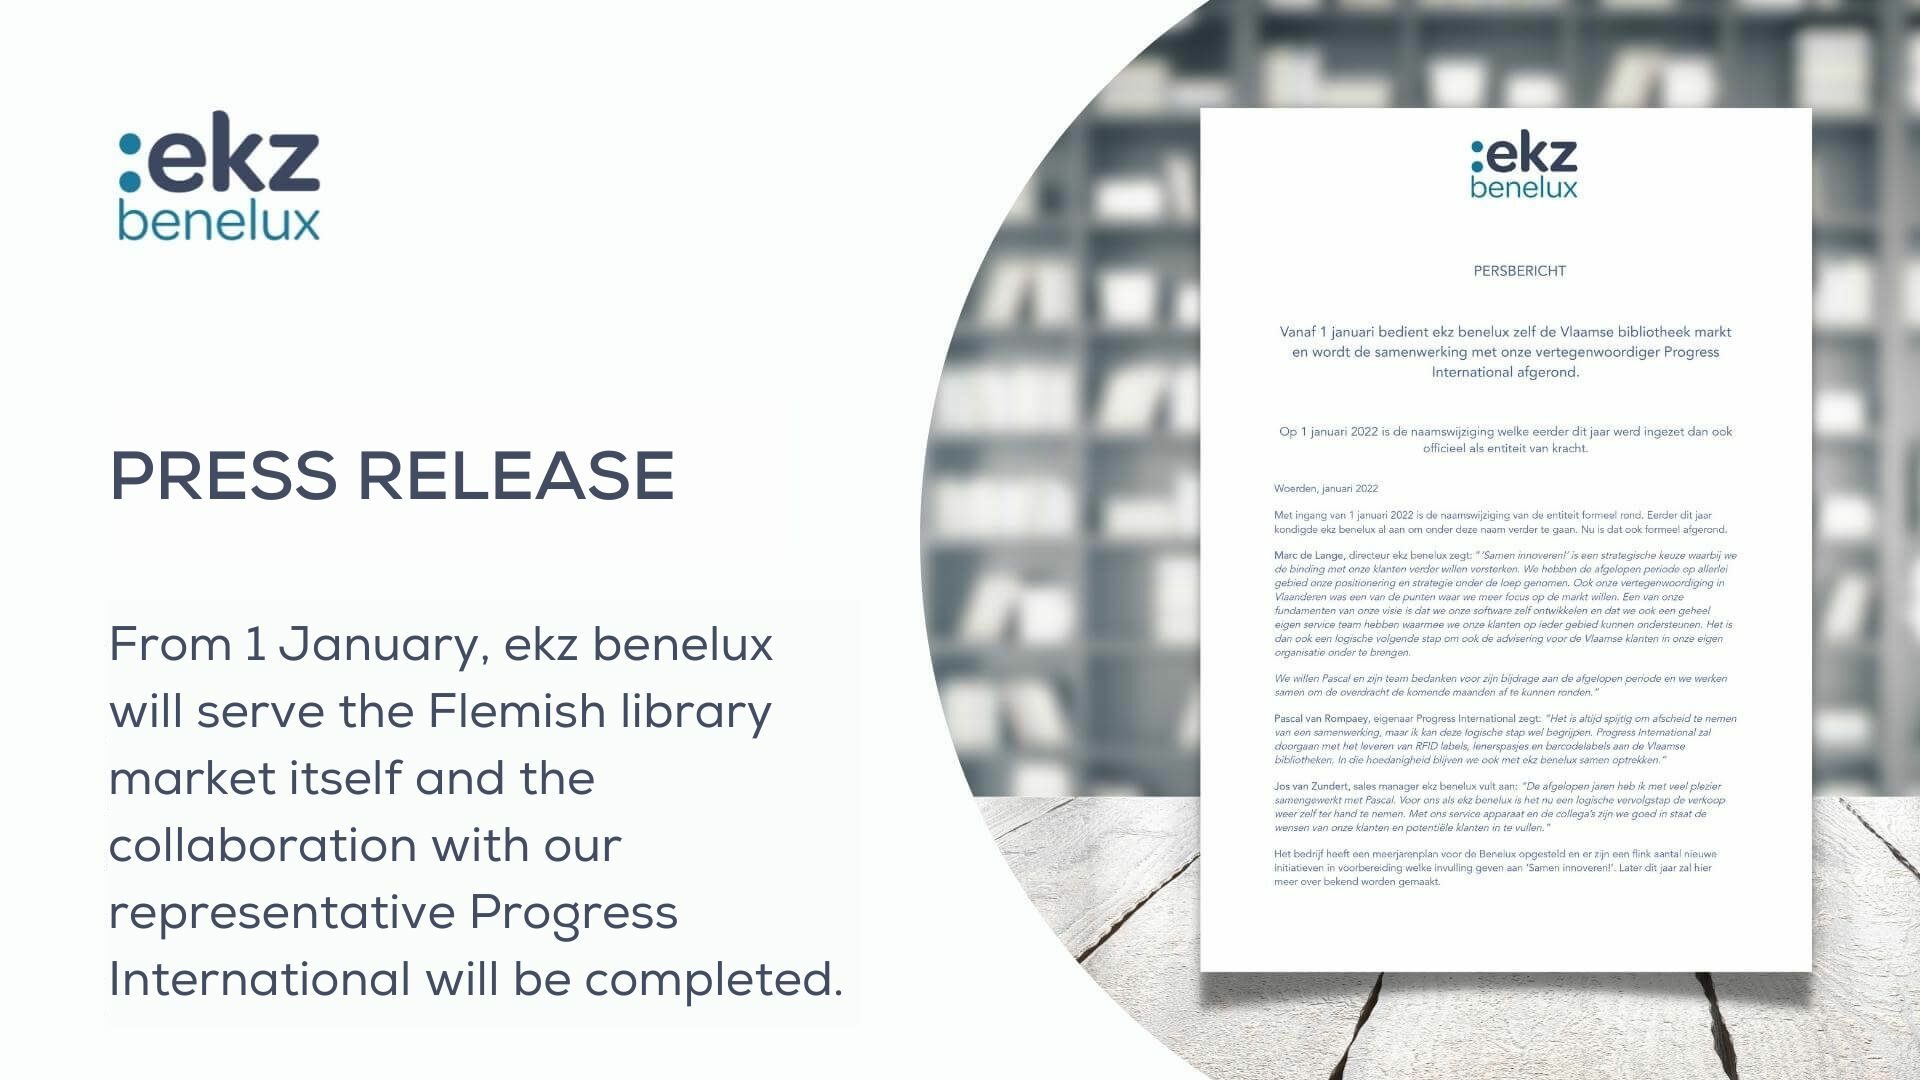 Press release - ekz benelux